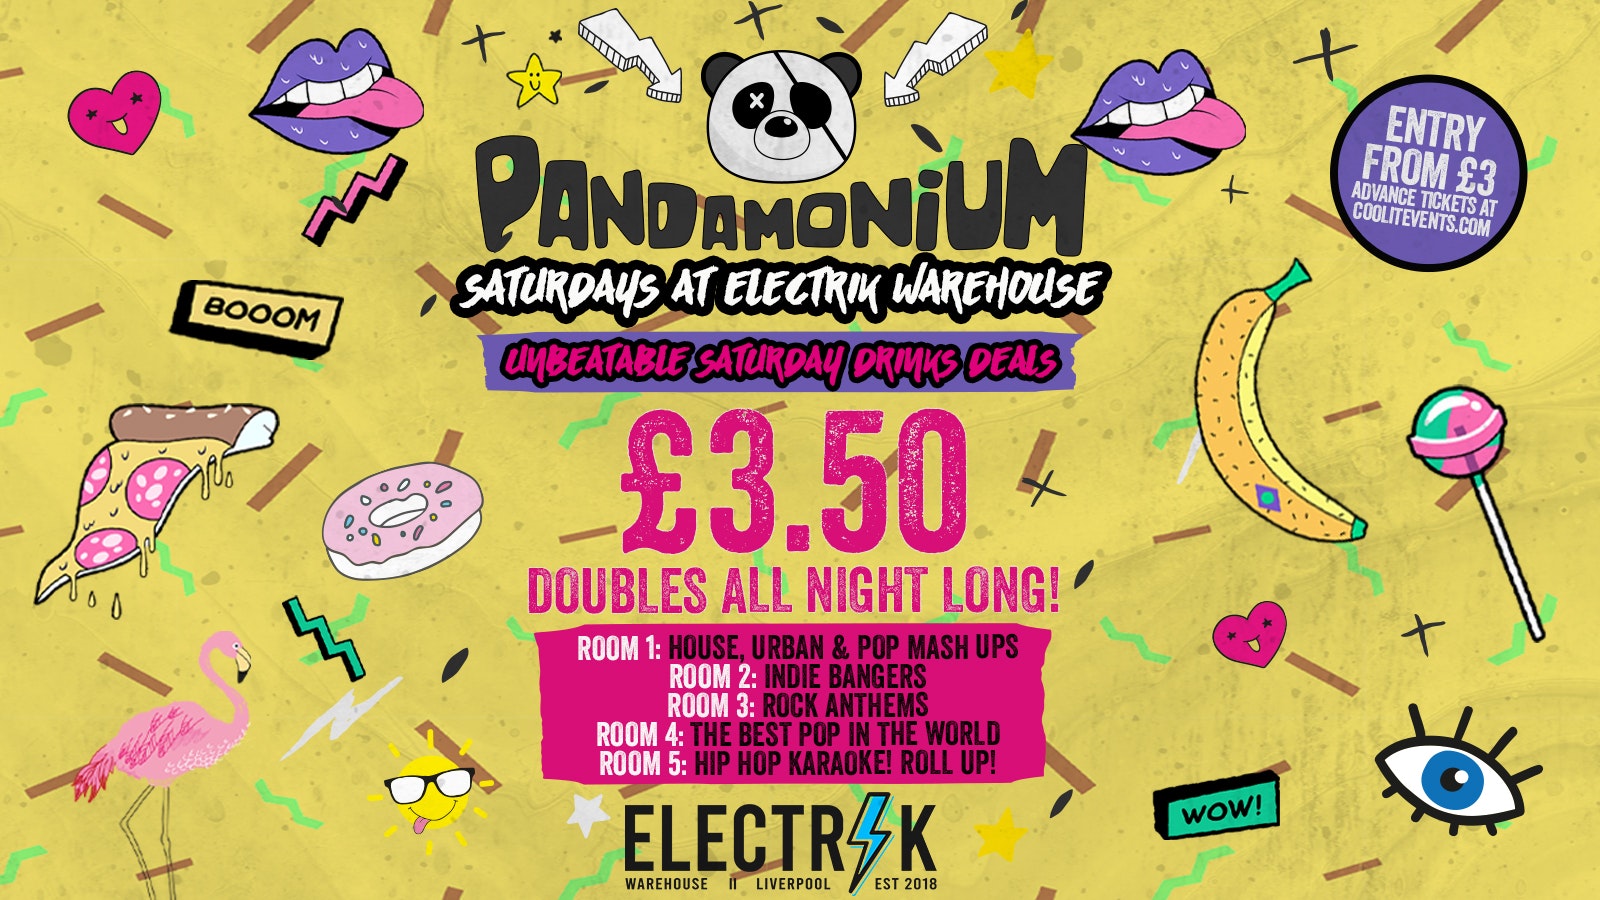 Pandamonium Saturdays – £3.50 DOUBLES ALL NIGHT!